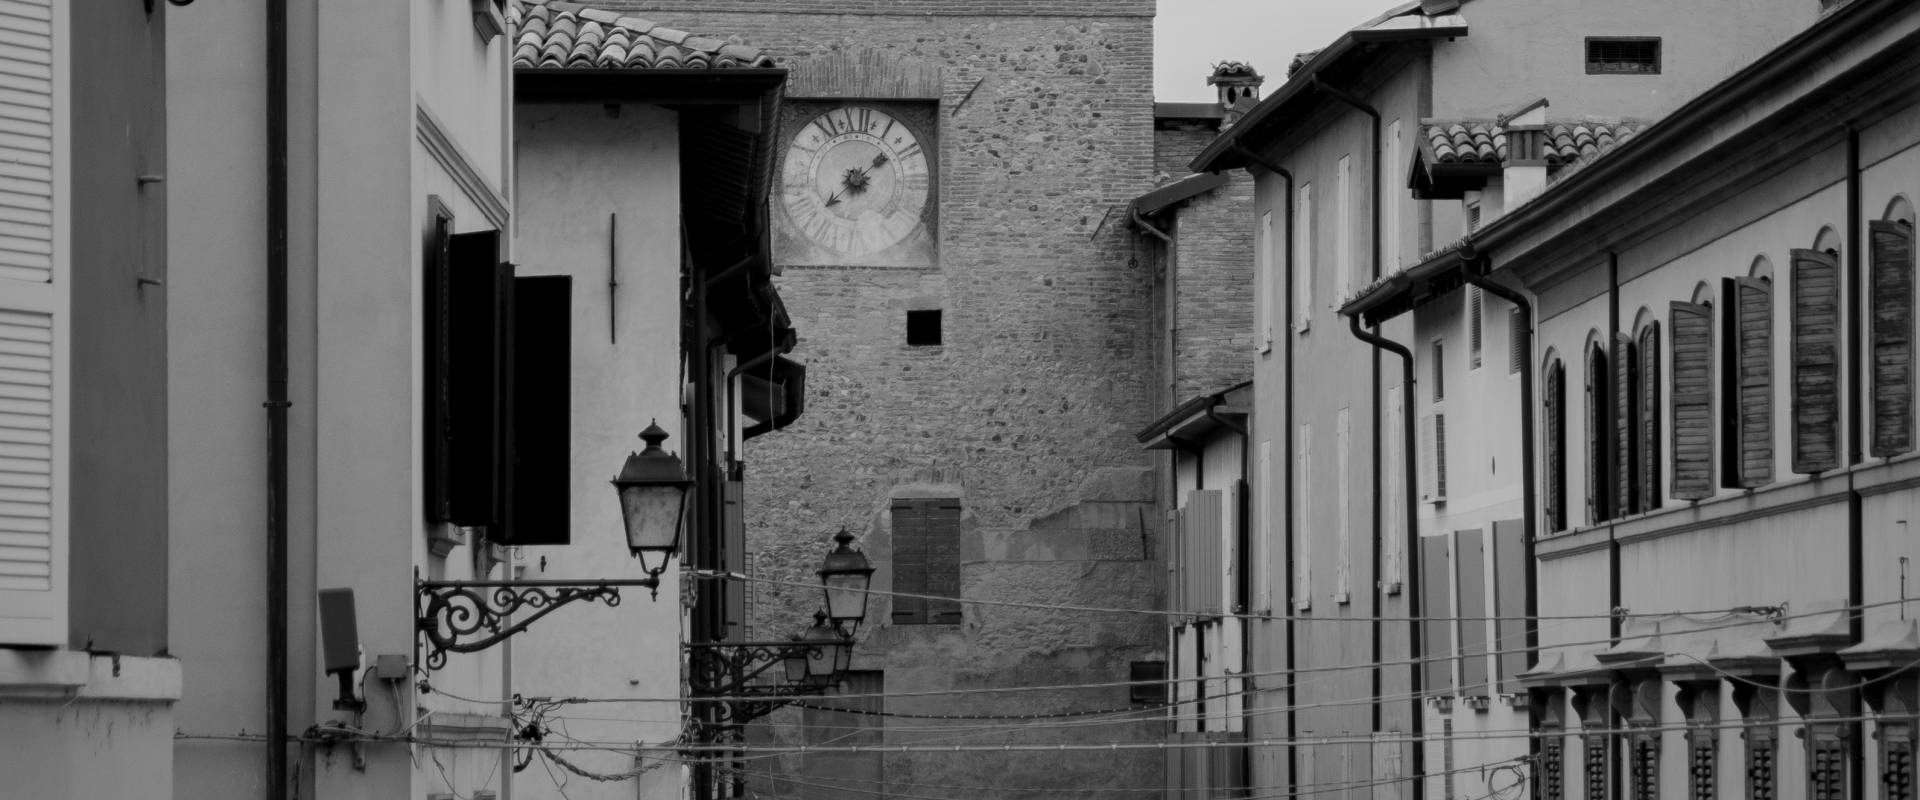 Torre dell'orologio, Scandiano photo by Arianna Perez